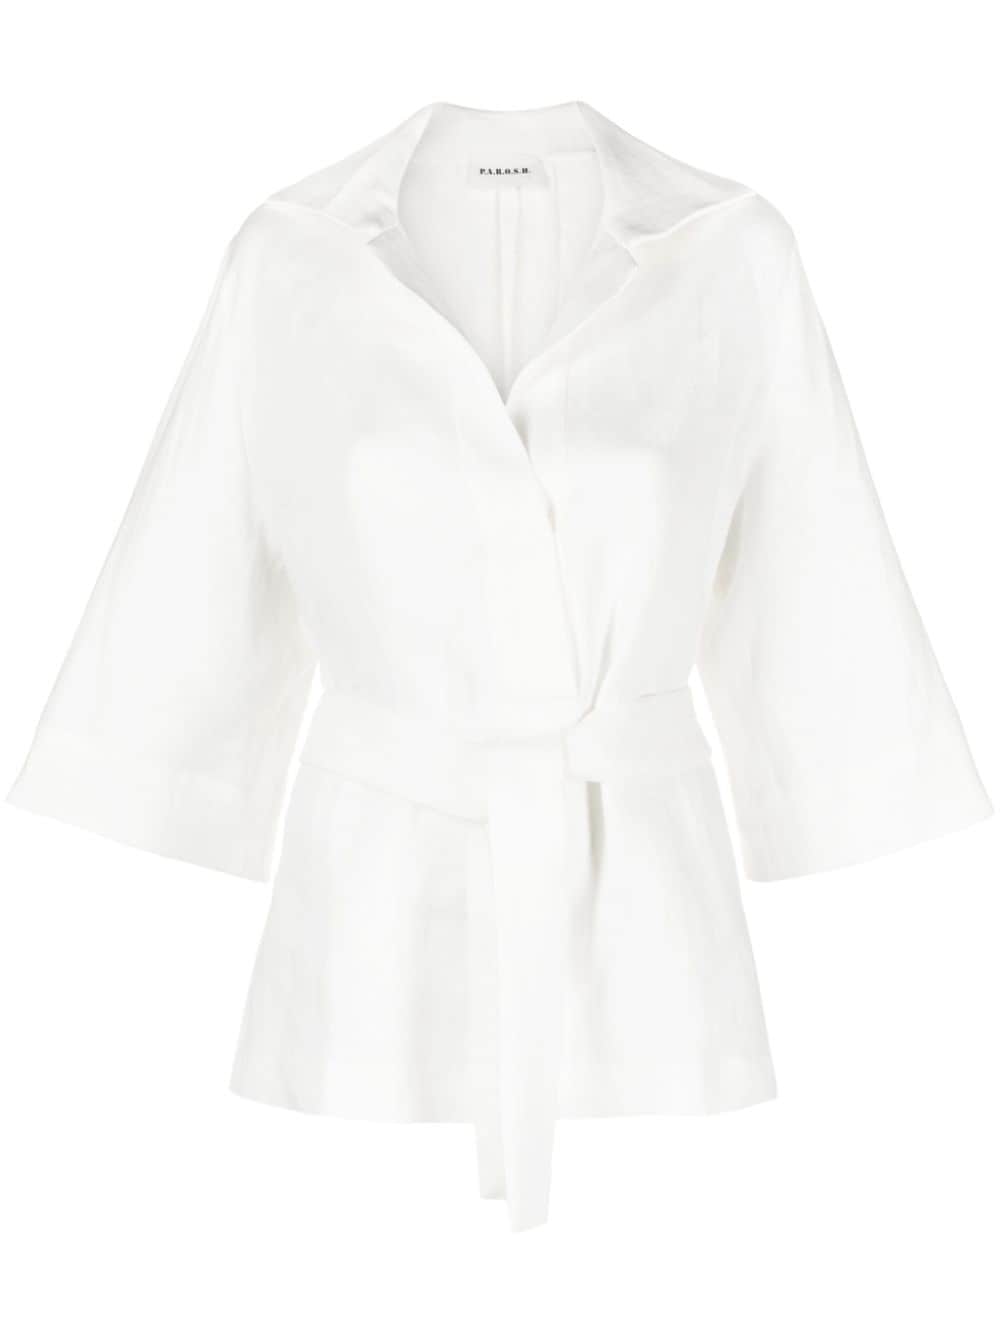 P.A.R.O.S.H. belted linen blouse - White von P.A.R.O.S.H.